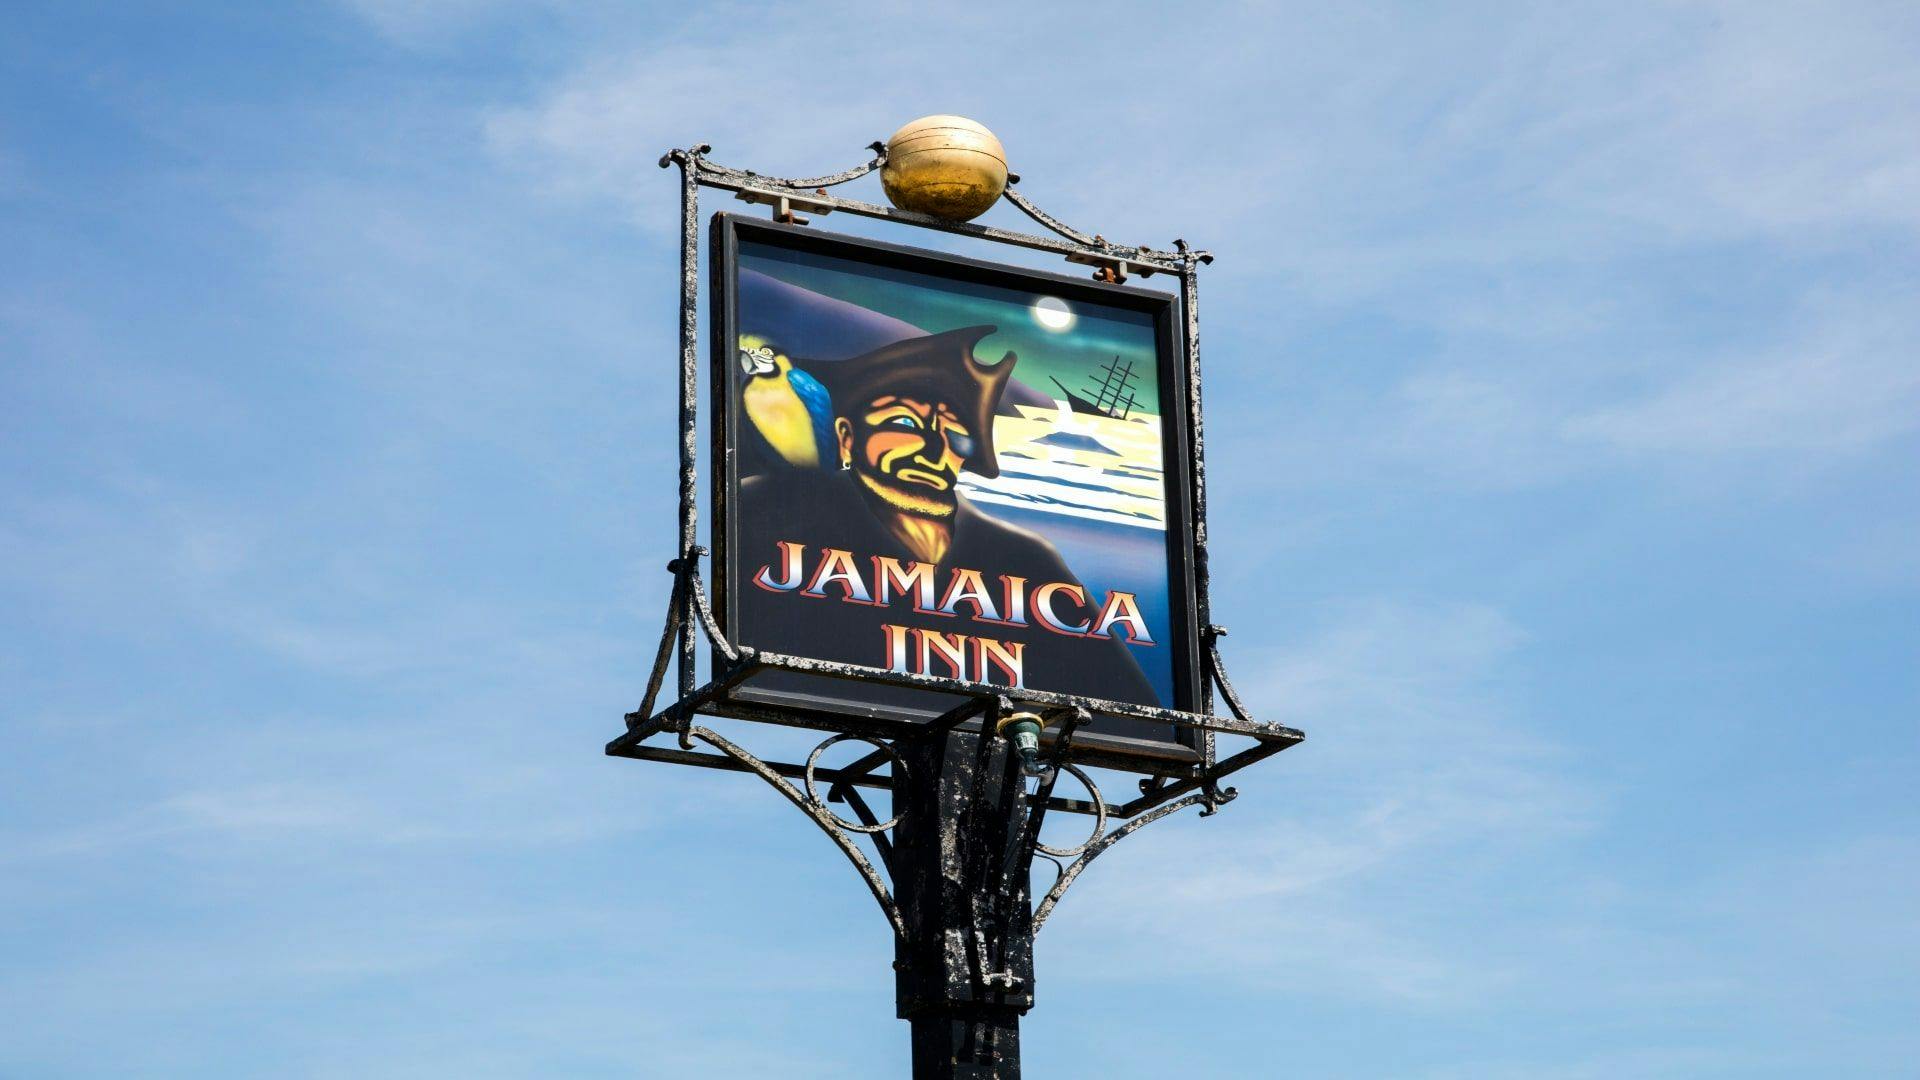 Jamaica Inn - 20 June 2017 - 1. Matt Jessop (1)-min.jpg